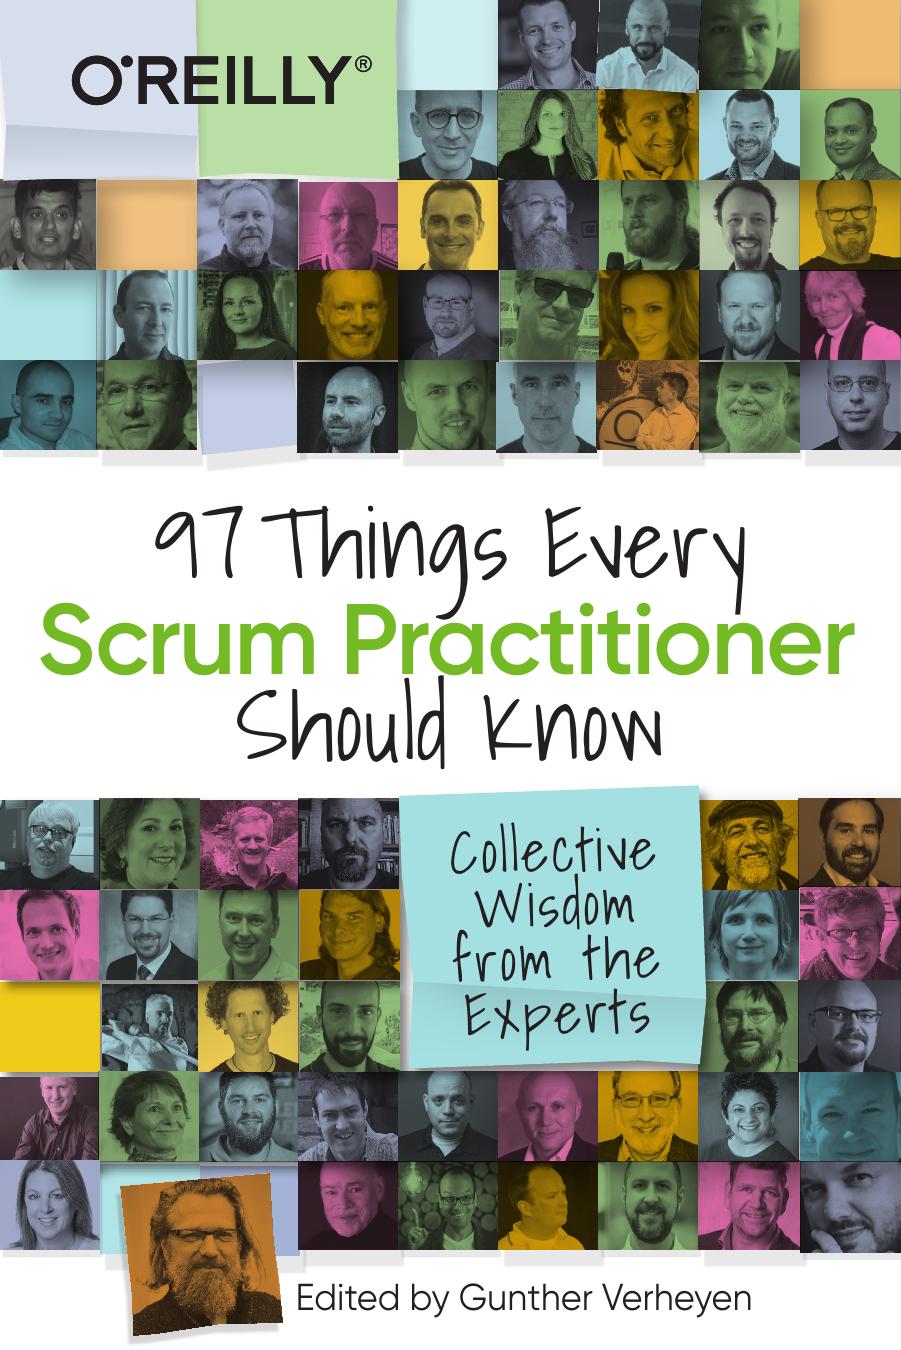 97 Things Every Scrum Practitioner Should Know by Gunther Verheyen